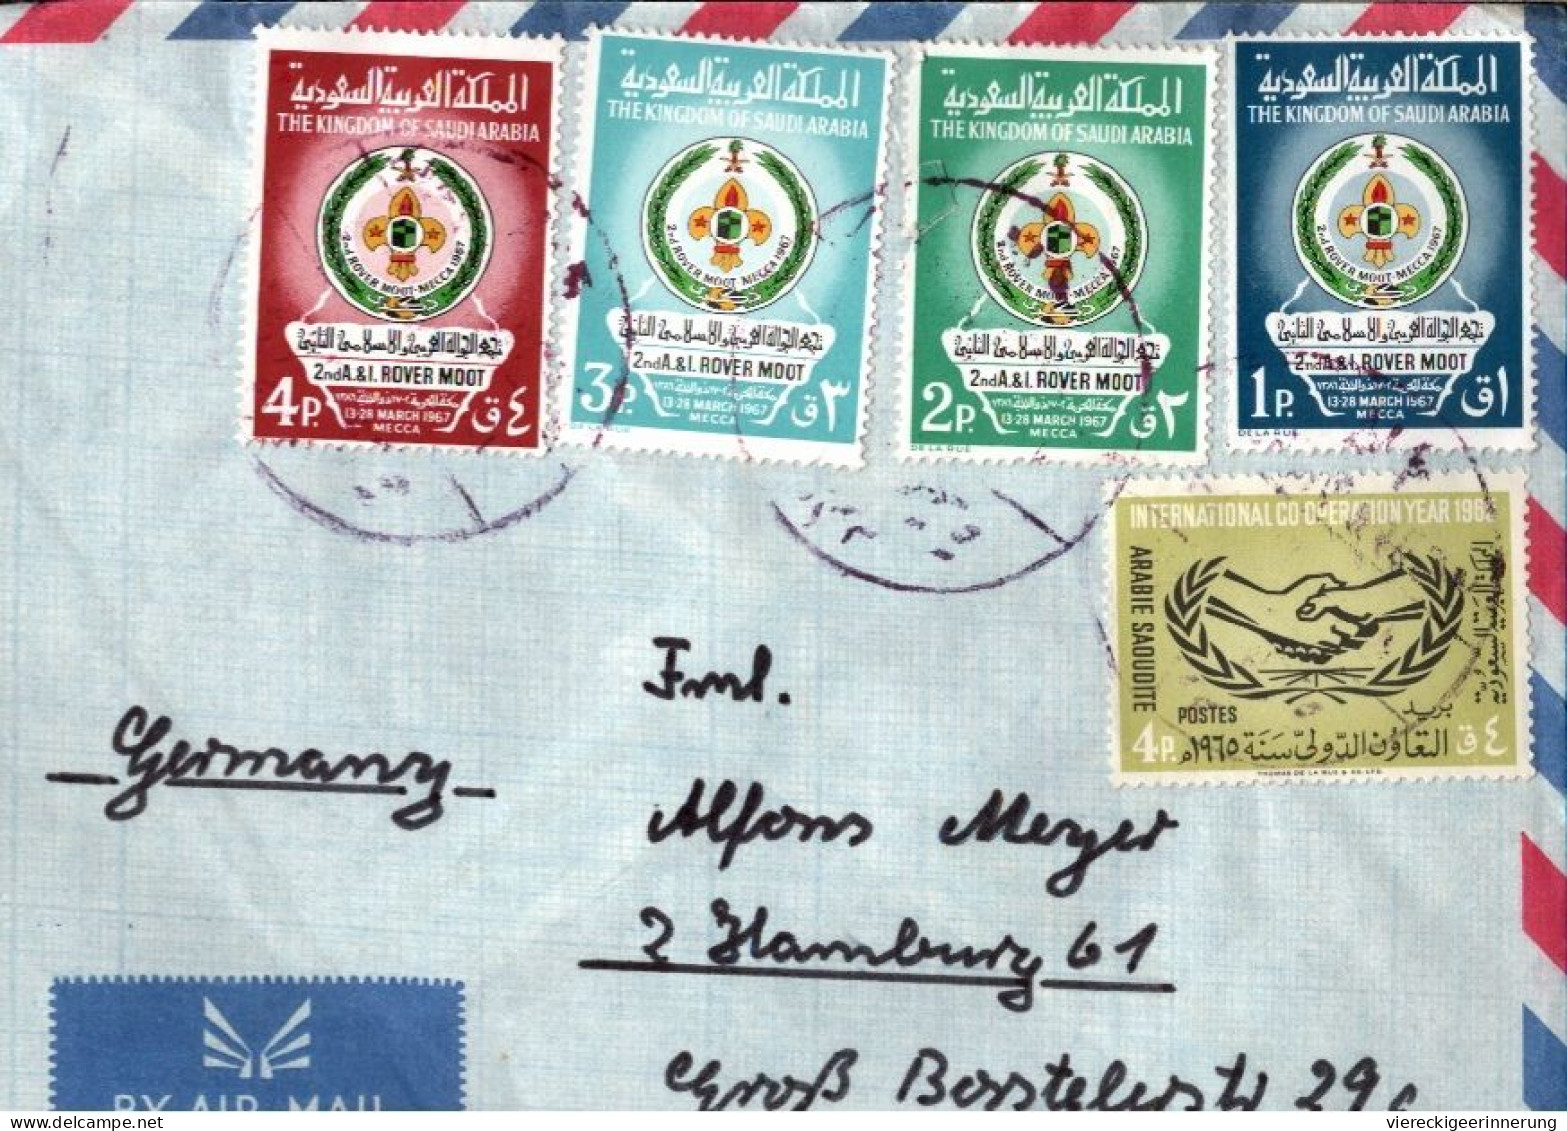 ! Luftpostbrief, Airmail Cover, 1967 Aus Jeddah, Saudi Arabia, Boyscout Stamps - Saudi Arabia